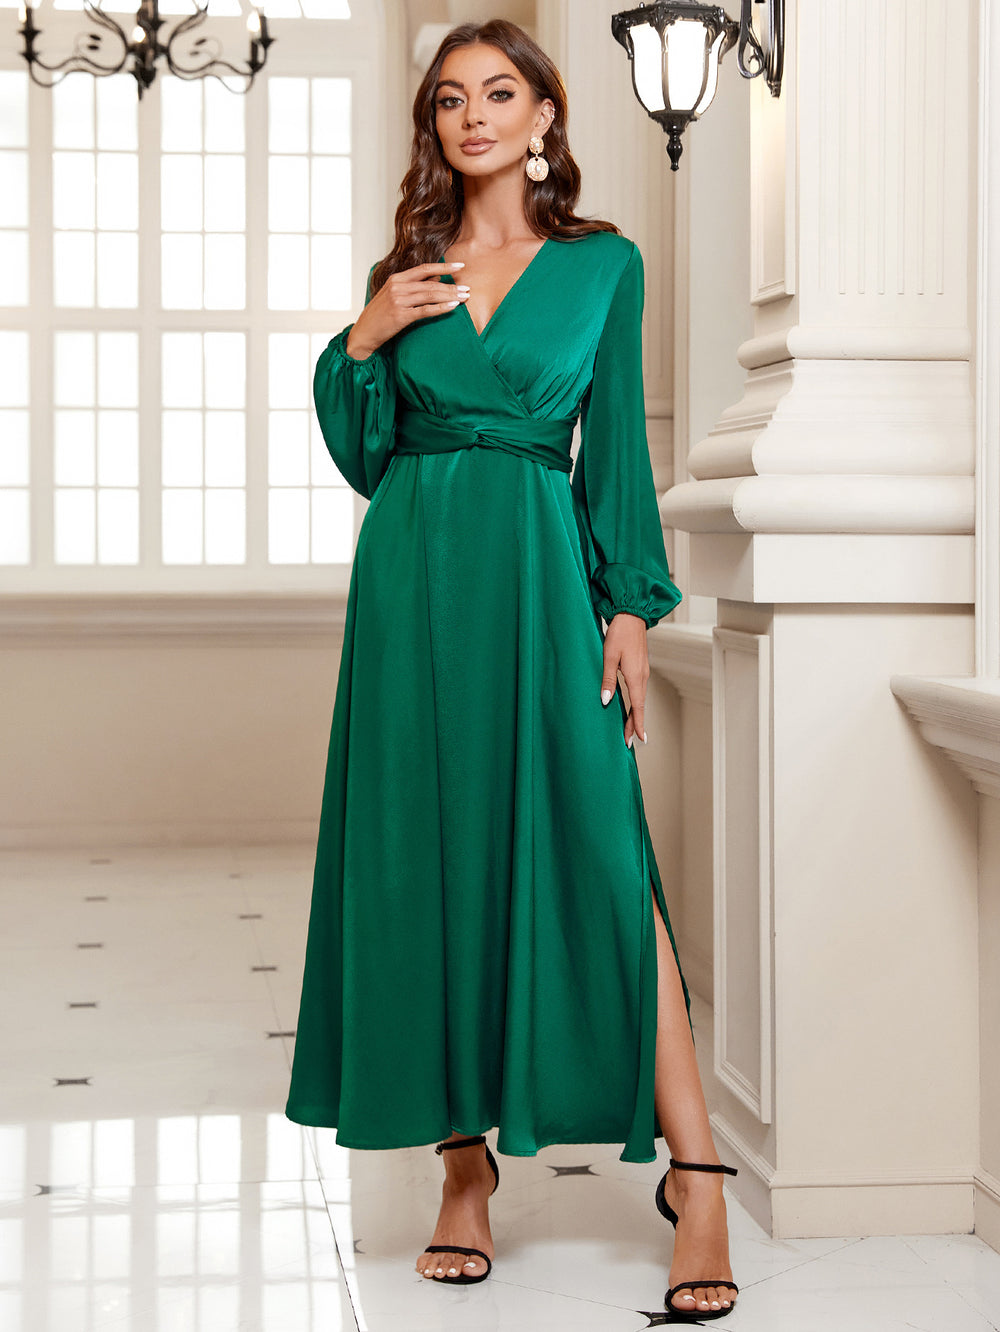 Fall Women Clothing Advanced Sense Satin Long Sleeve Elegant Loose Dress